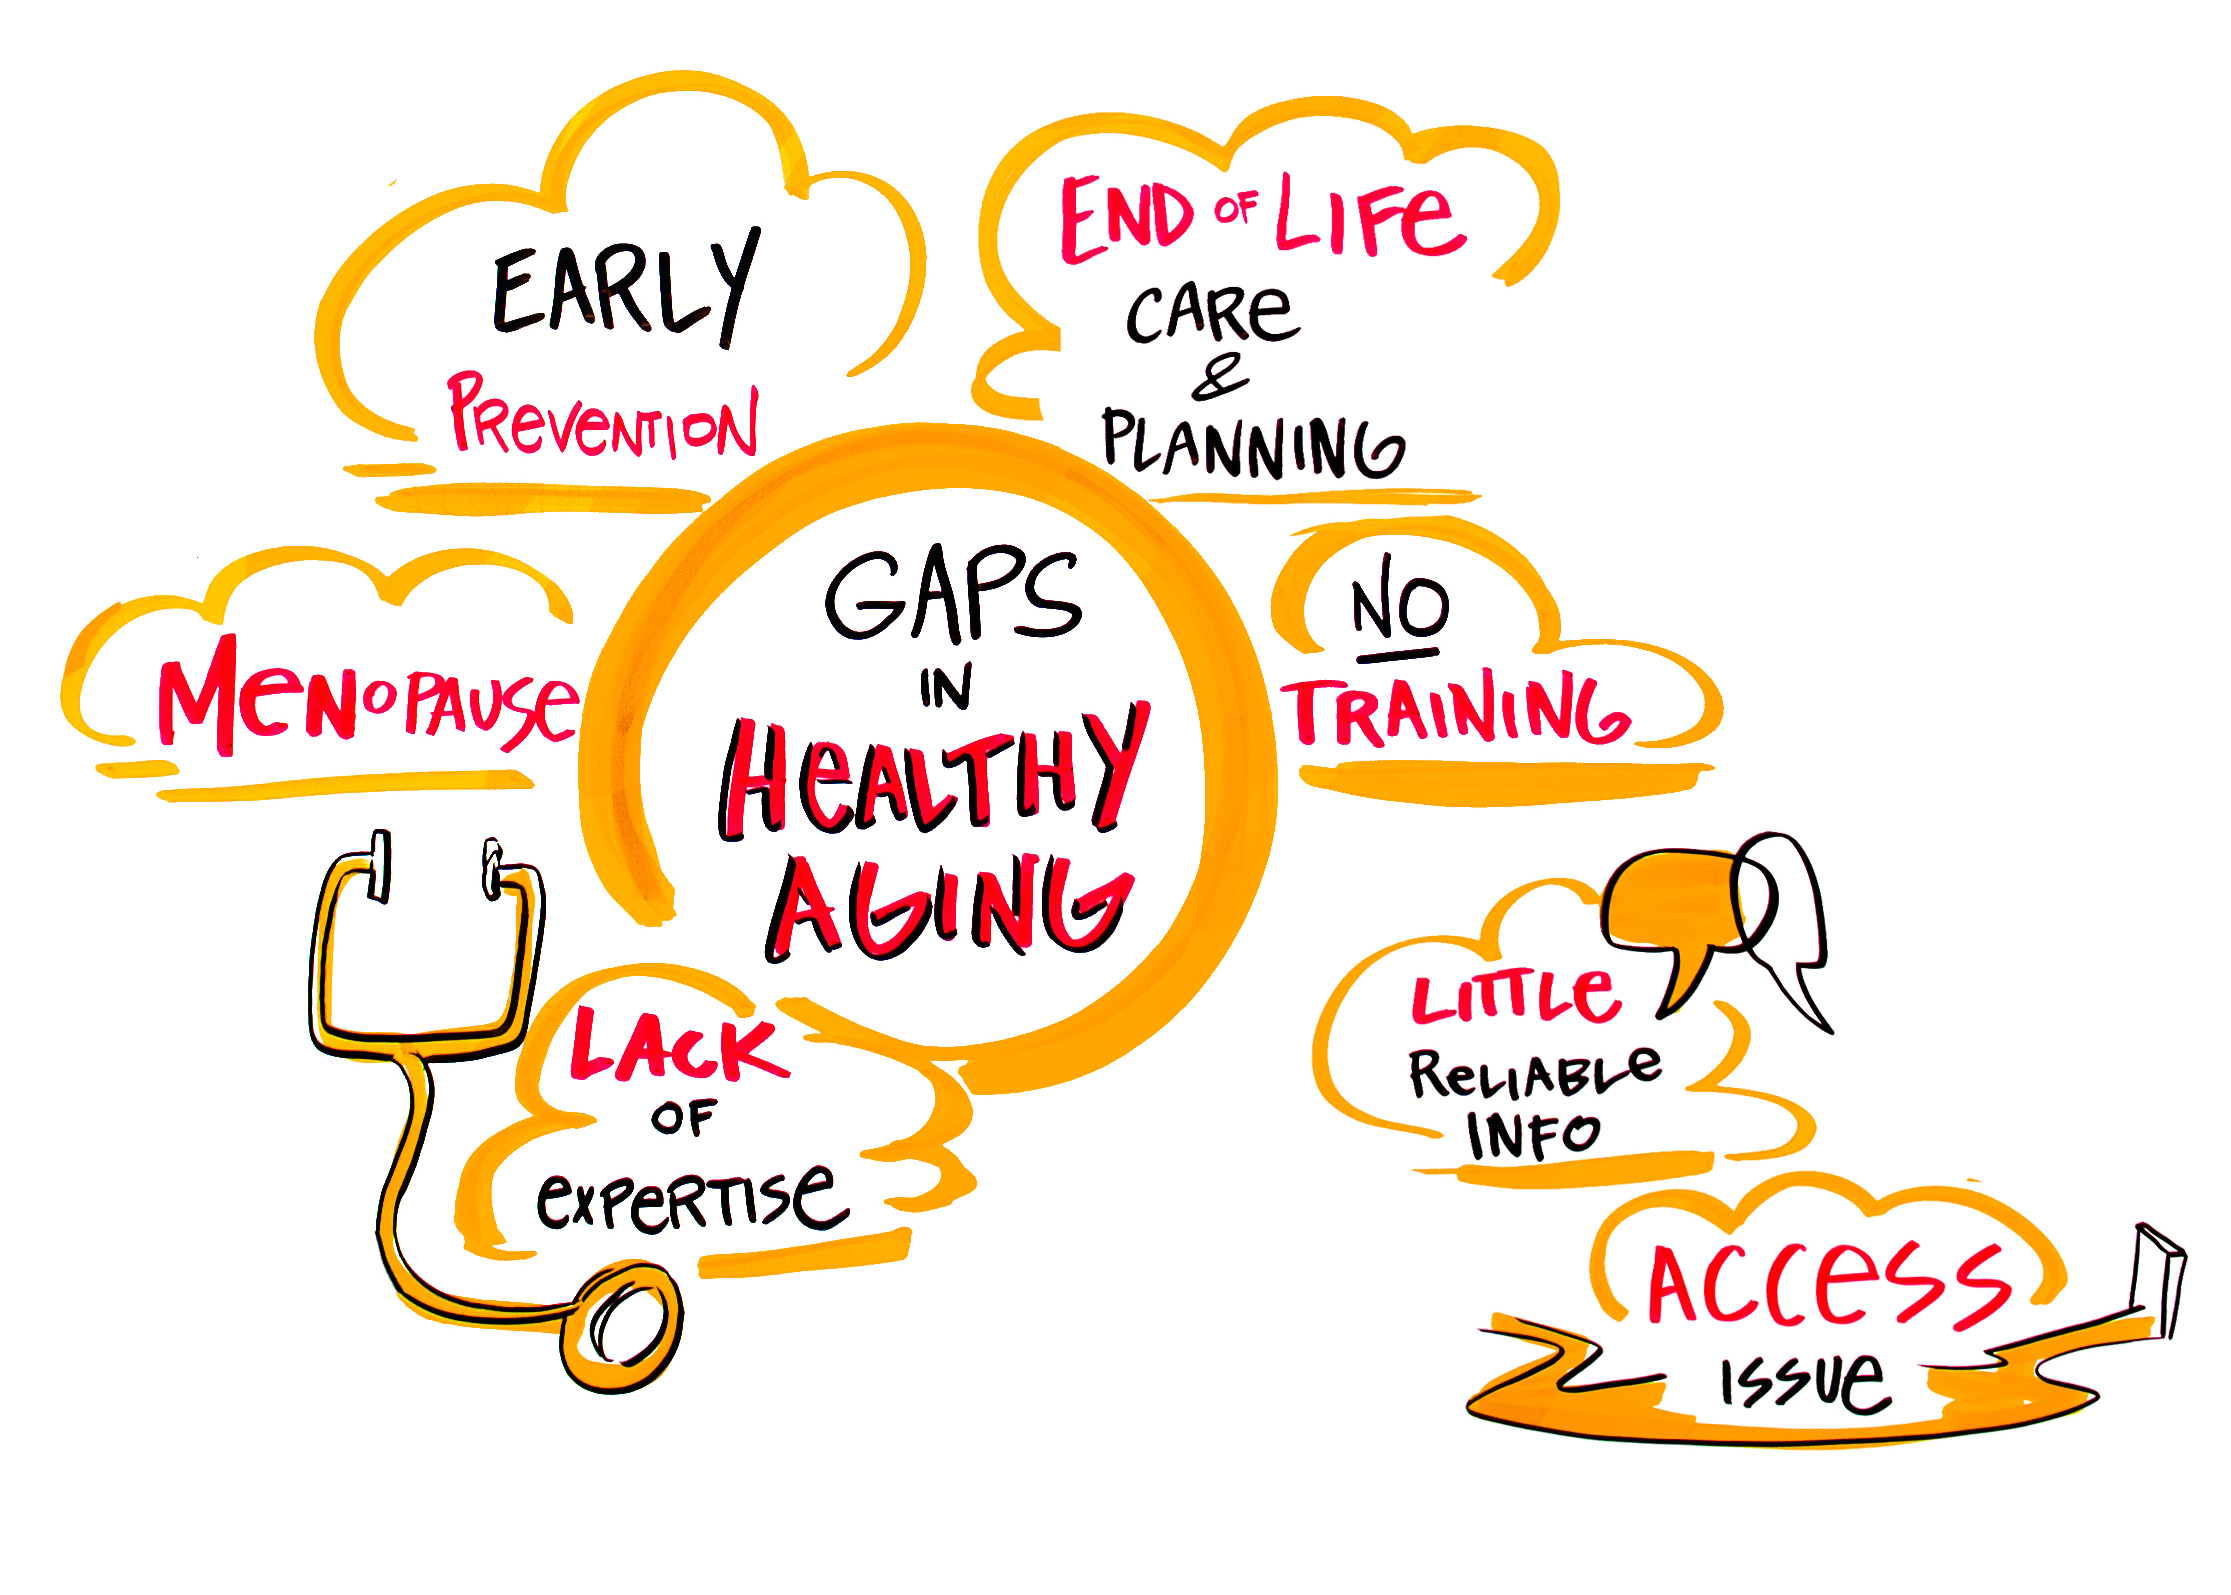 Gaps in Health Aging